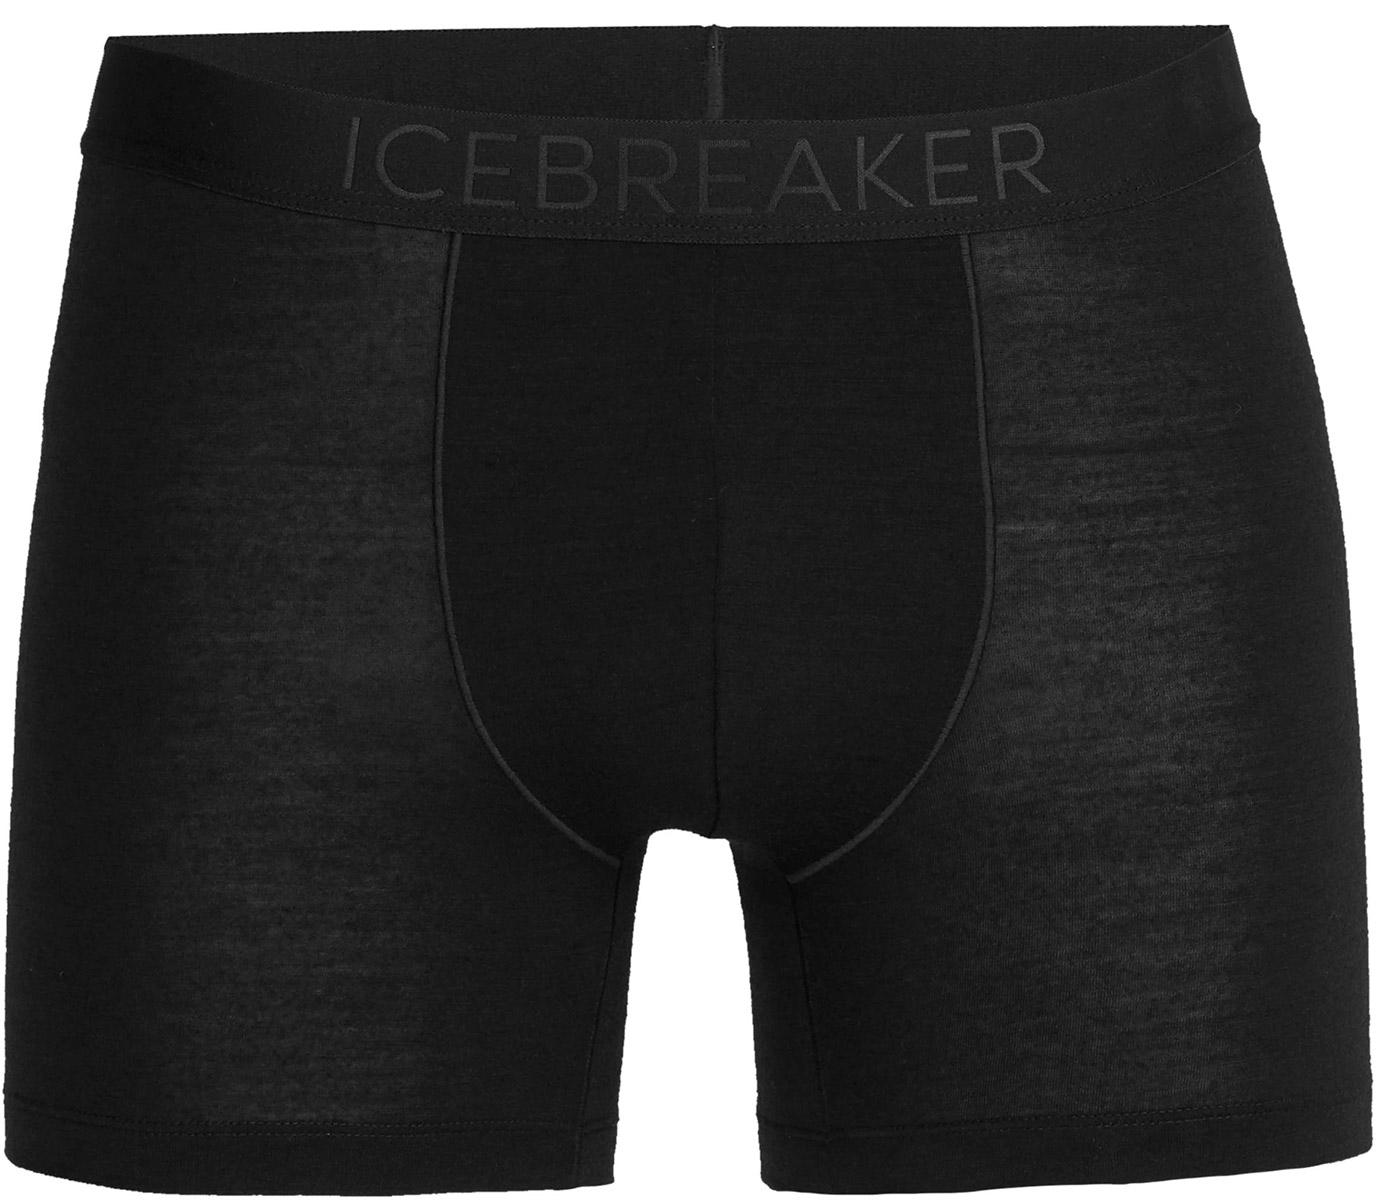 Icebreaker Anatomica Cool-lite Boxers - Black